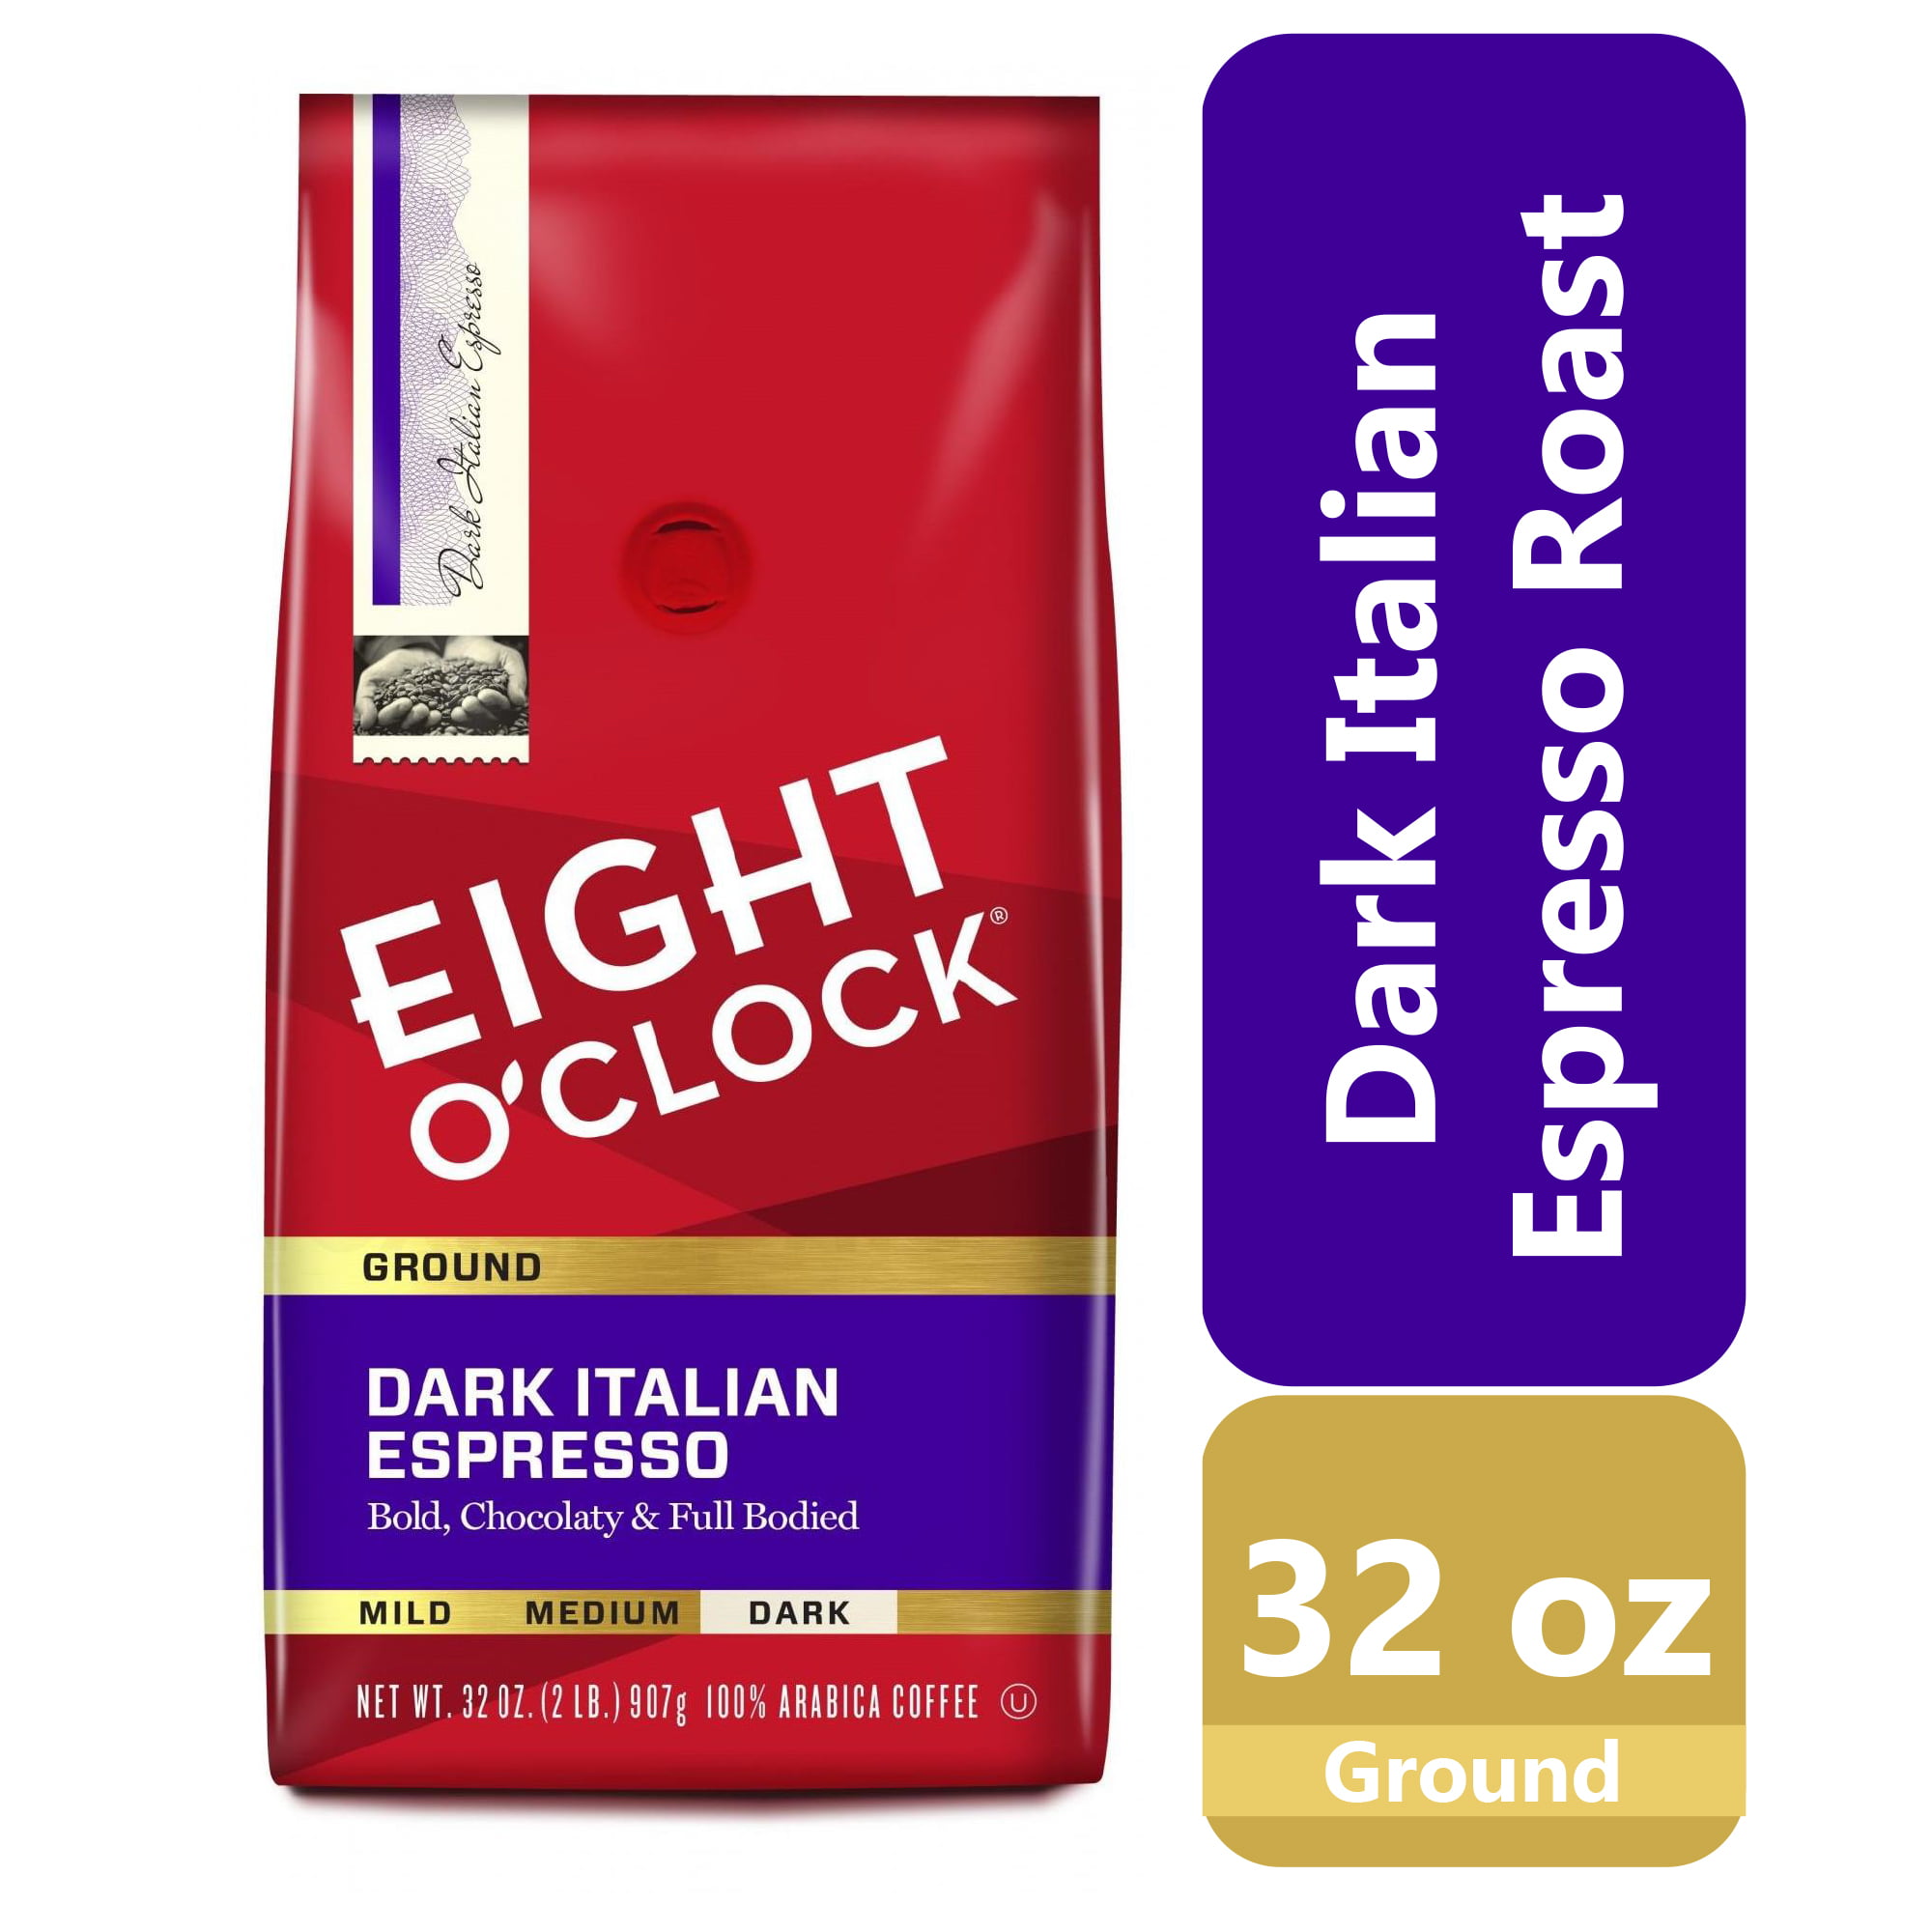 Eight O'Clock, Dark Italian Espresso, Dark Roast Ground Coffee, 32 oz, Bag